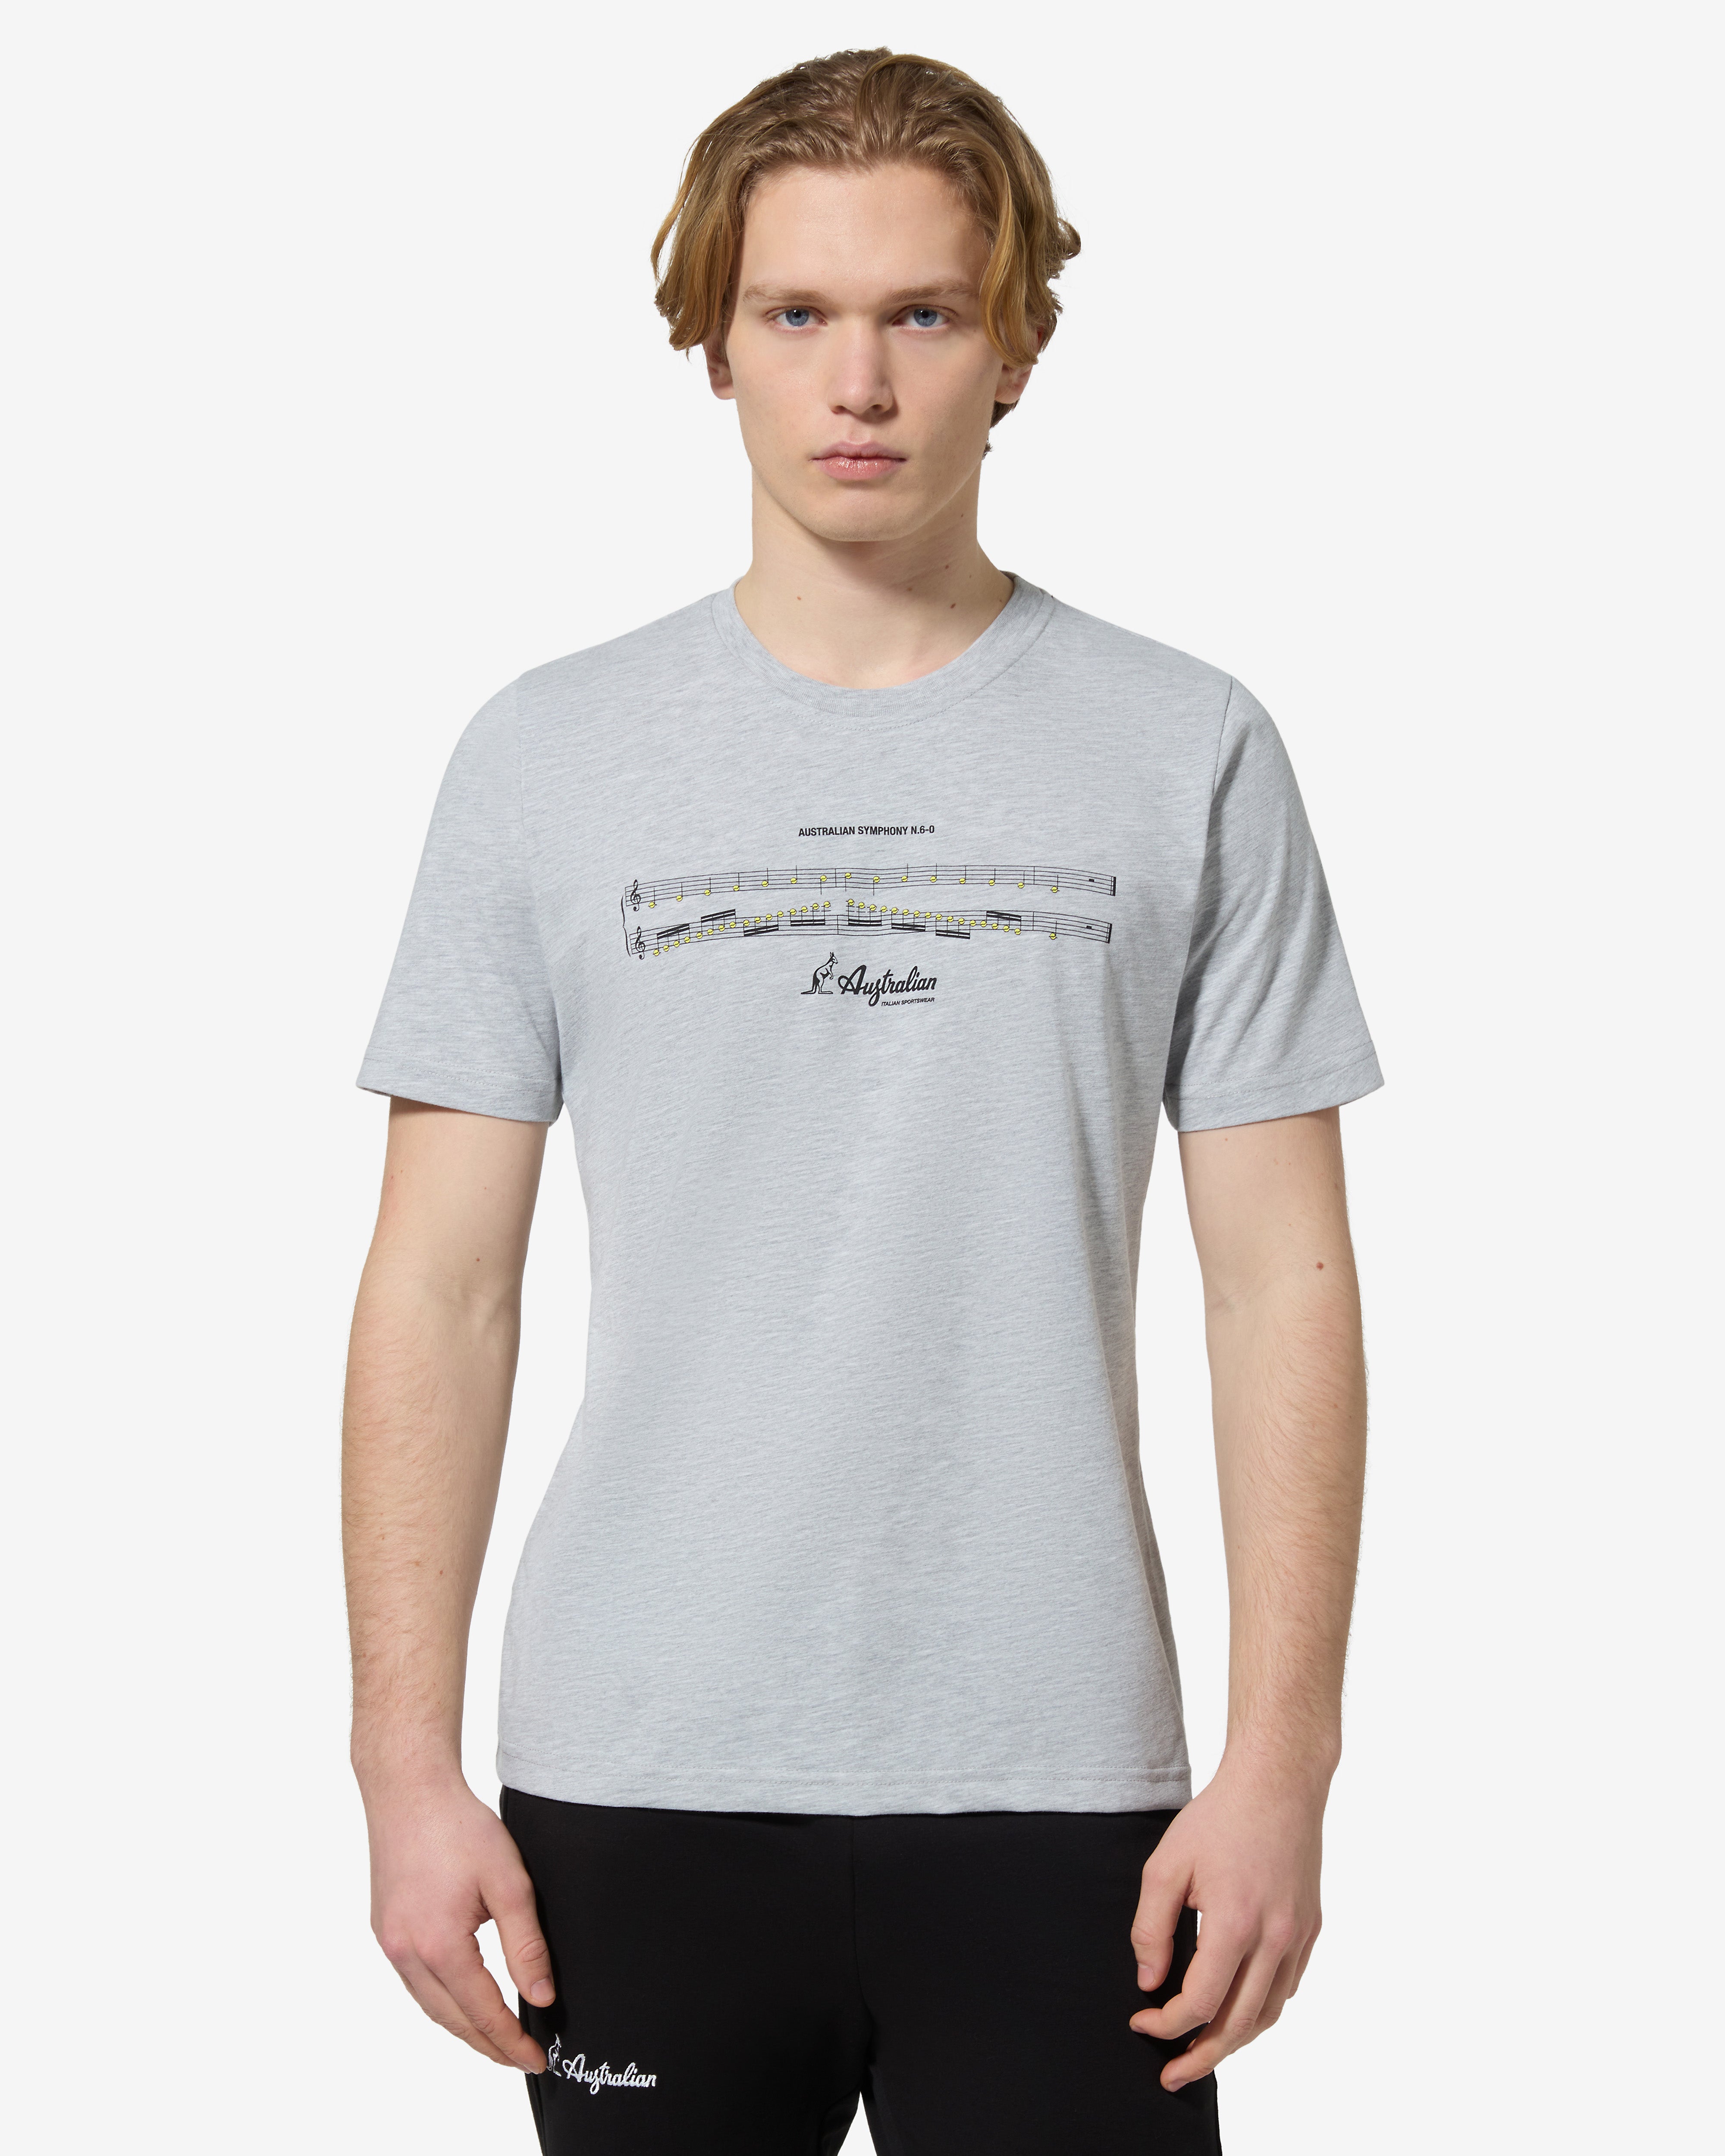 Symphony T-shirt